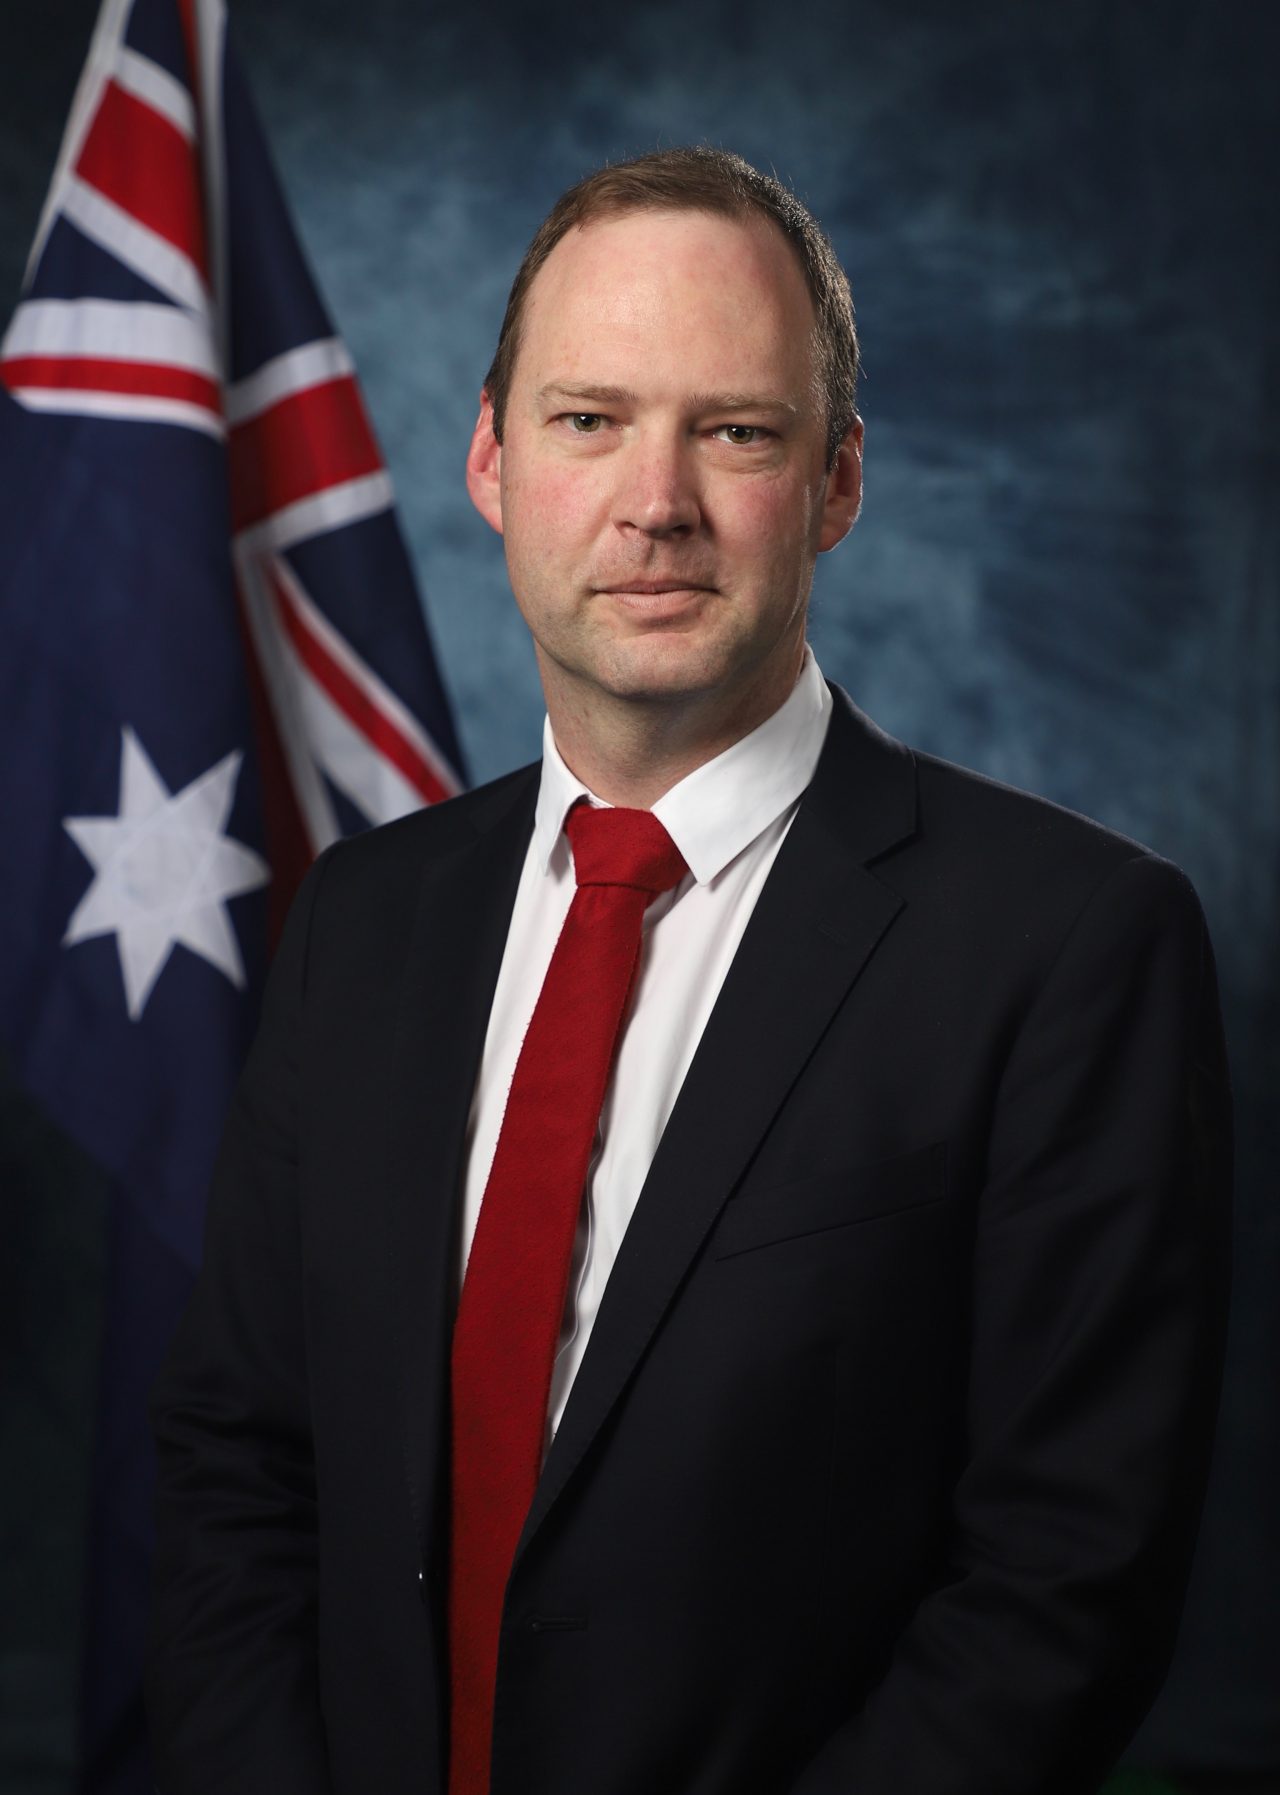 Australia Head of Delegation